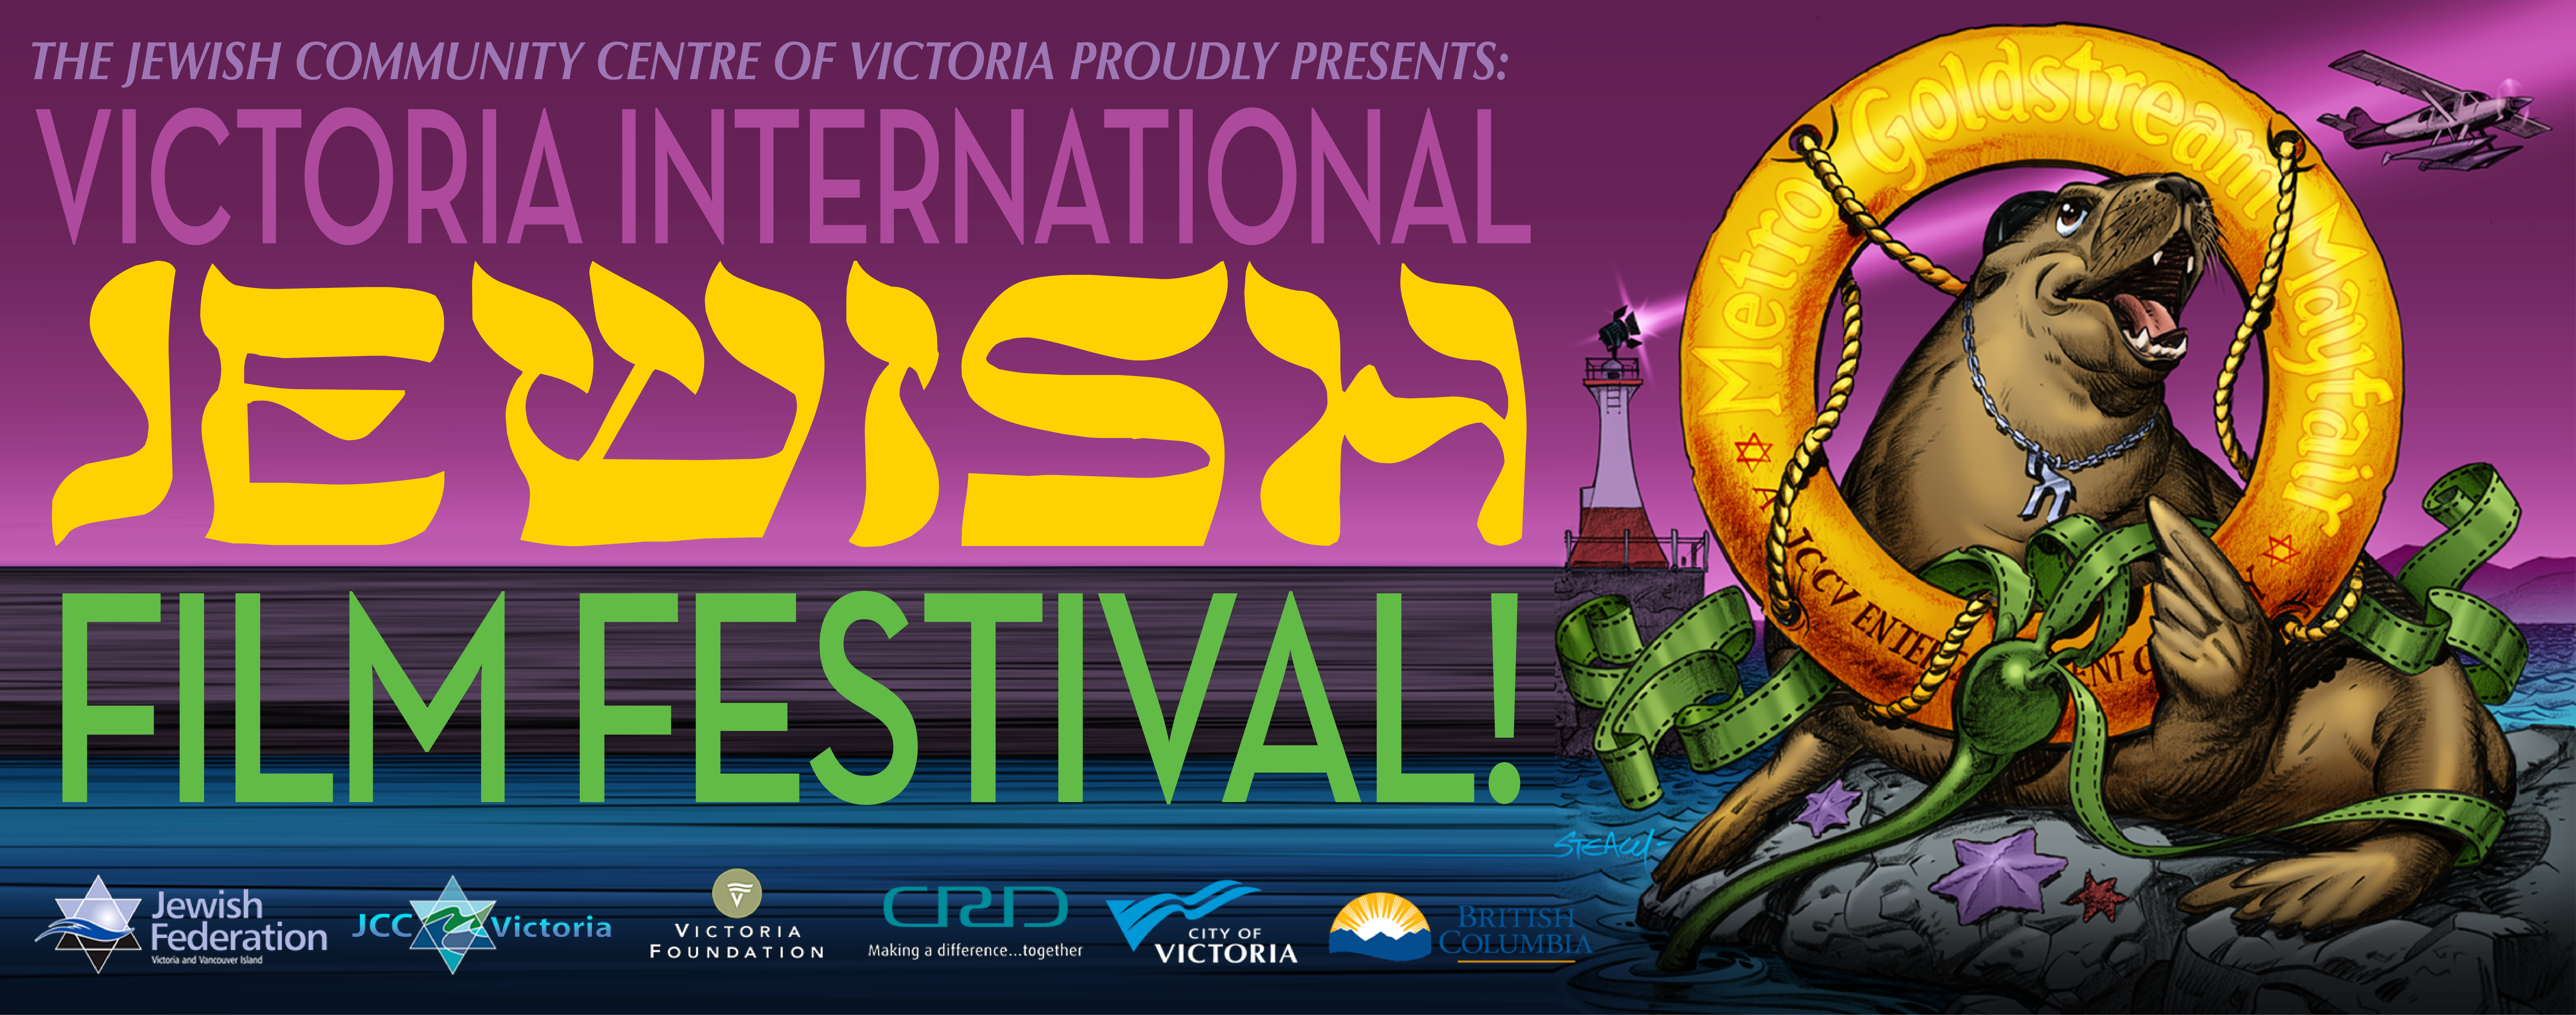 9th Annual Victoria International Jewish Film Festival